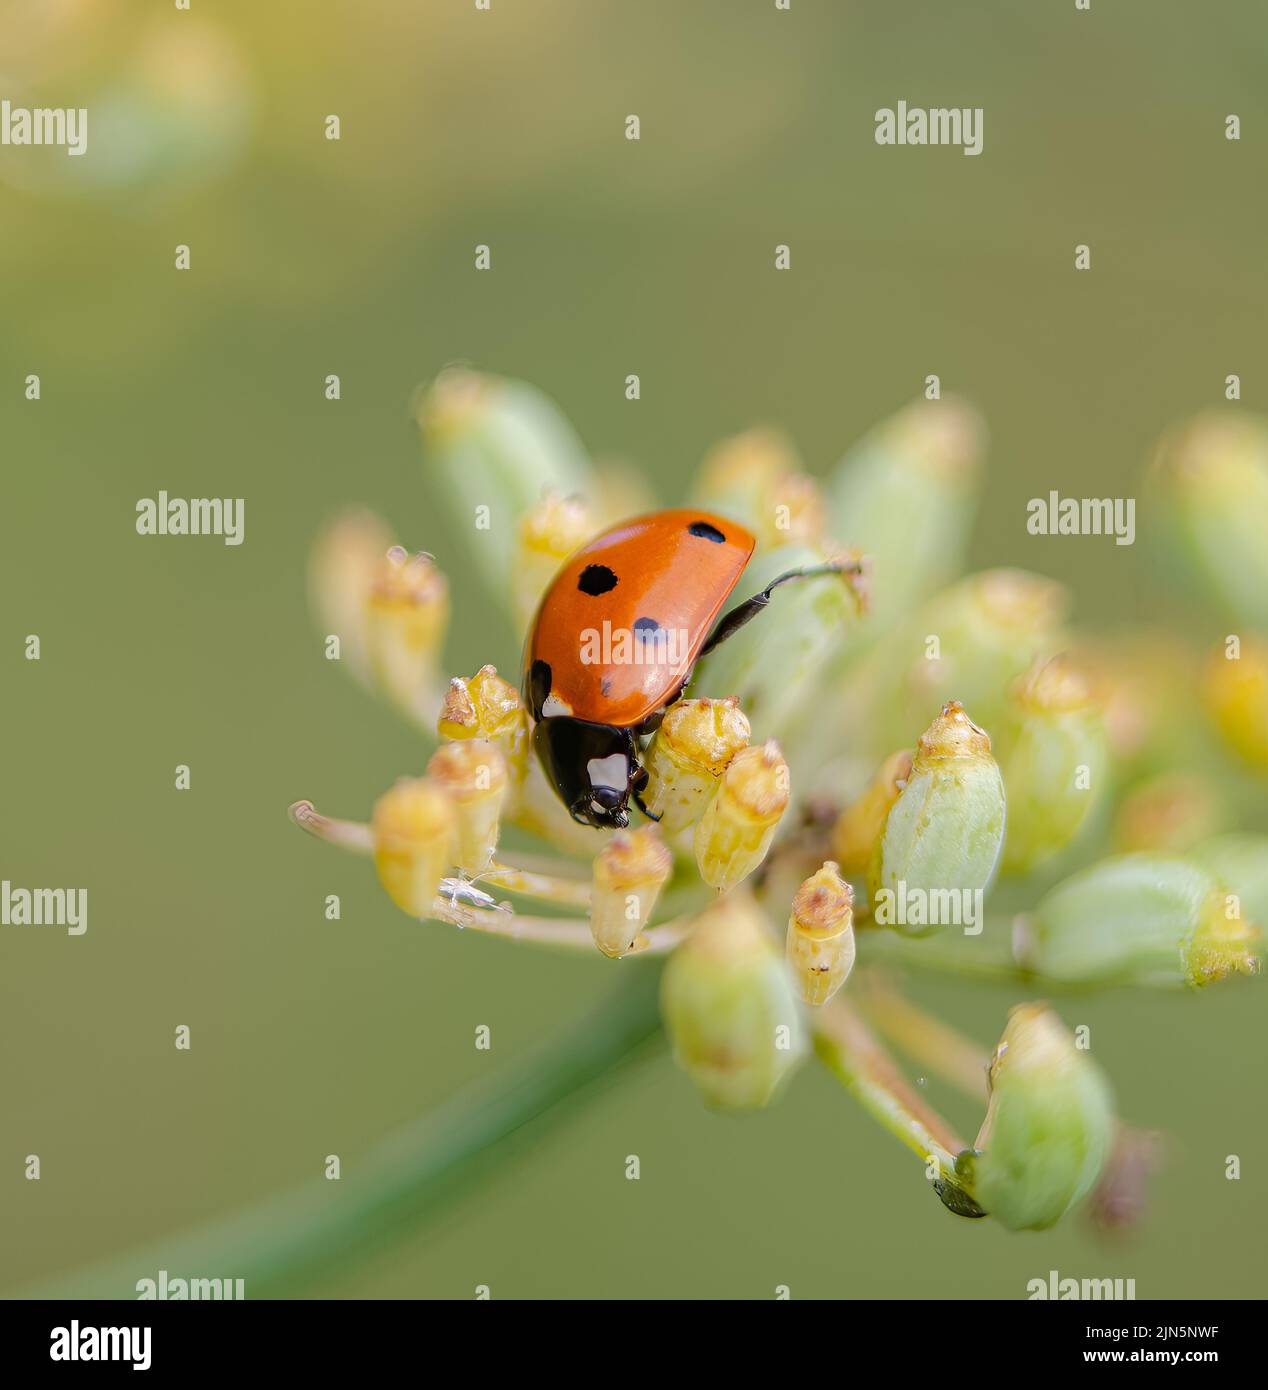 Ladybird on yellow fennel flower Stock Photo